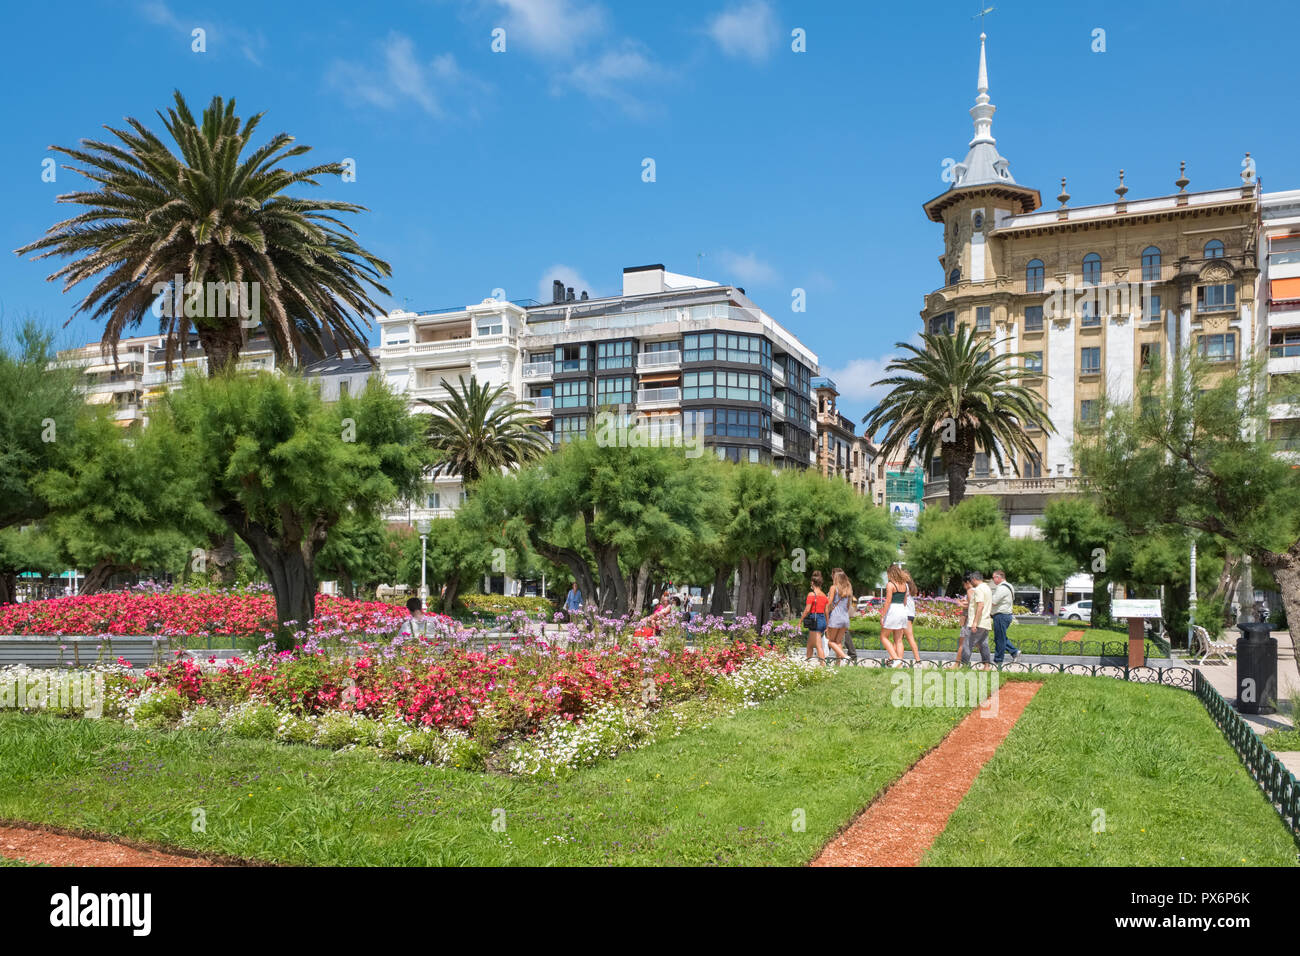 Parque Urbano o jardines públicos en el centro de San Sebastián, Donostia, País Vasco, España, Europa Foto de stock